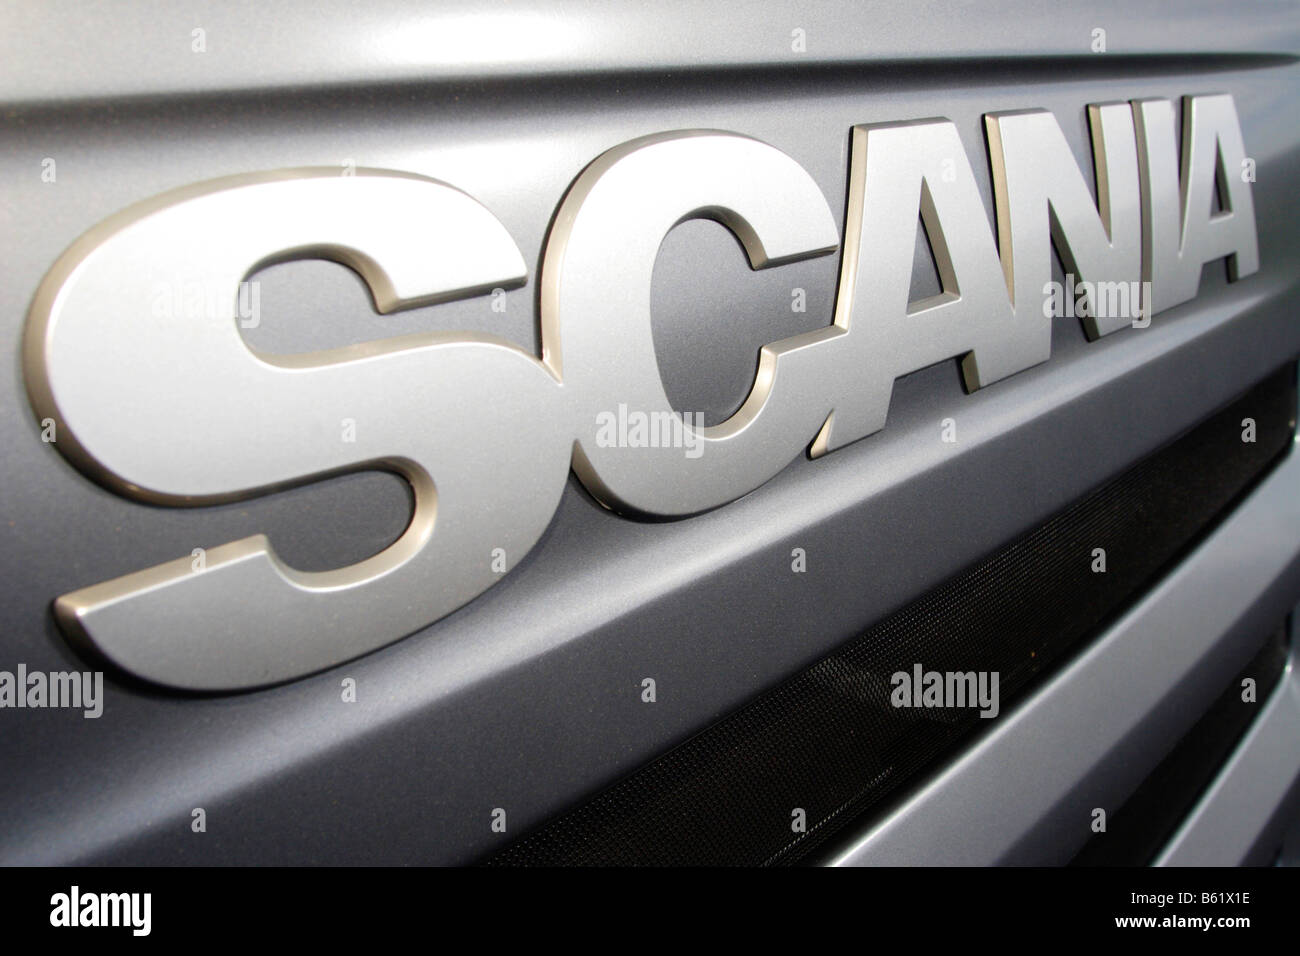 Scania truck logo Stock Photo